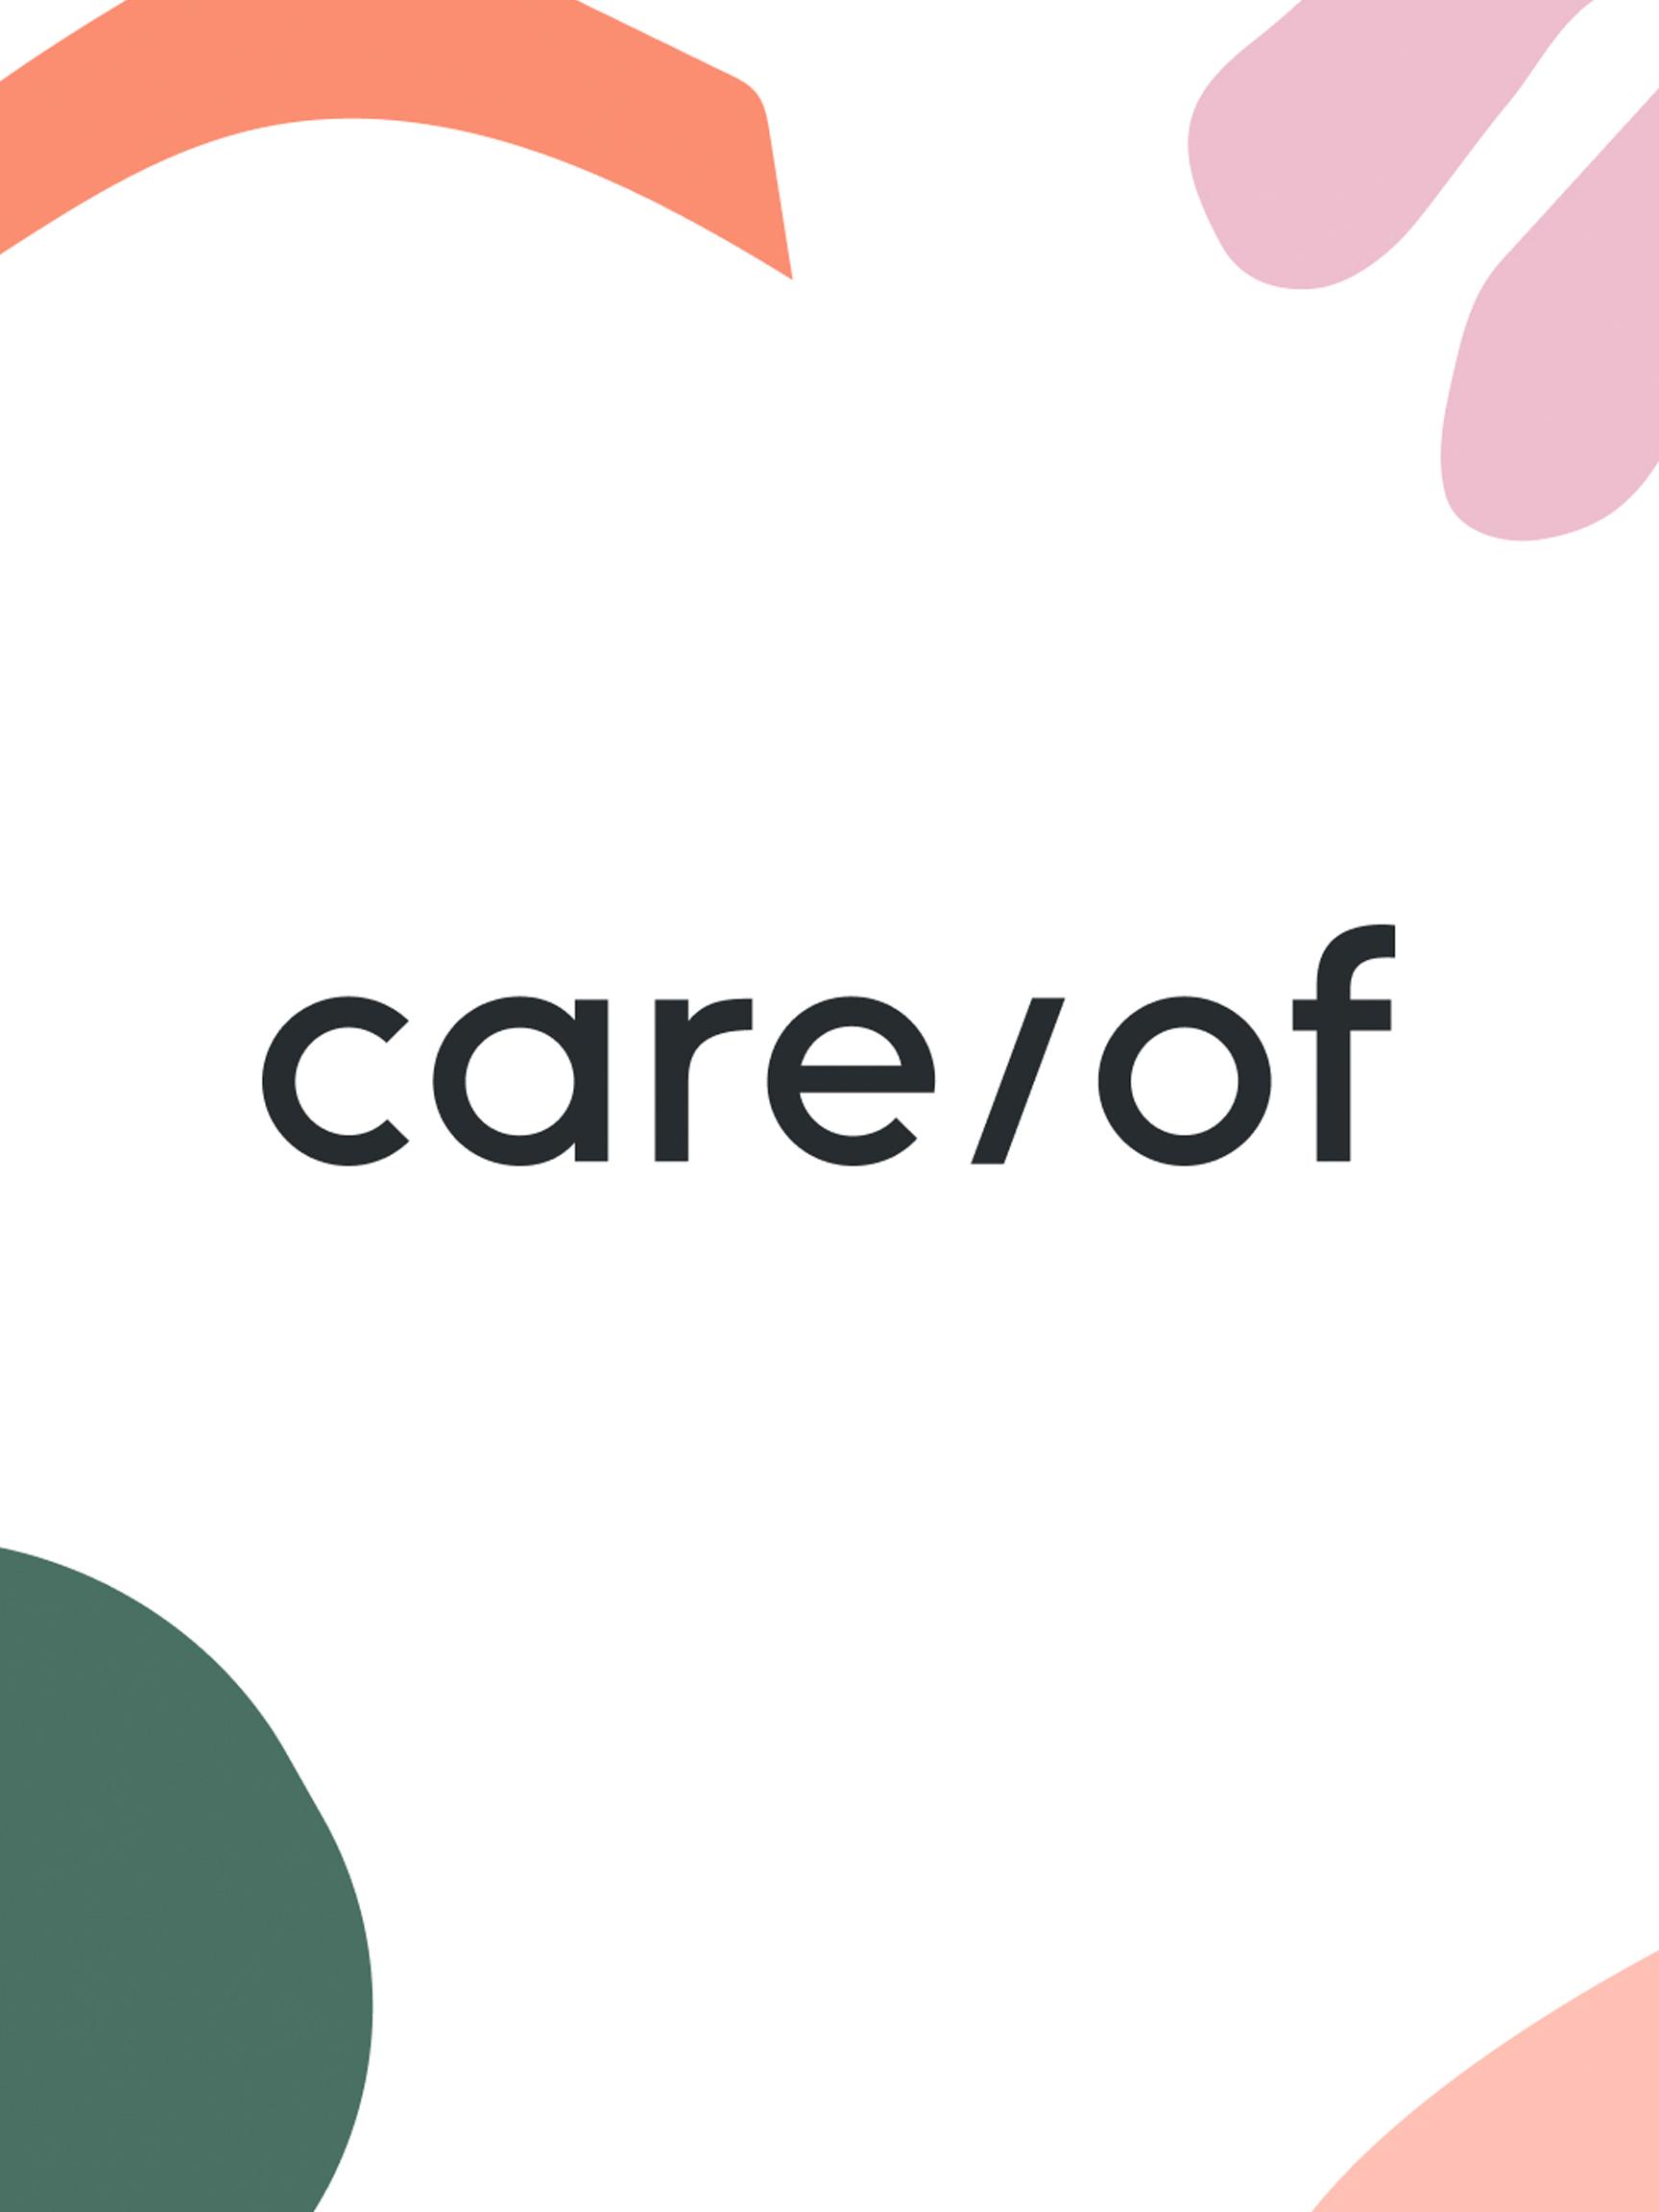 Careof logo 2x